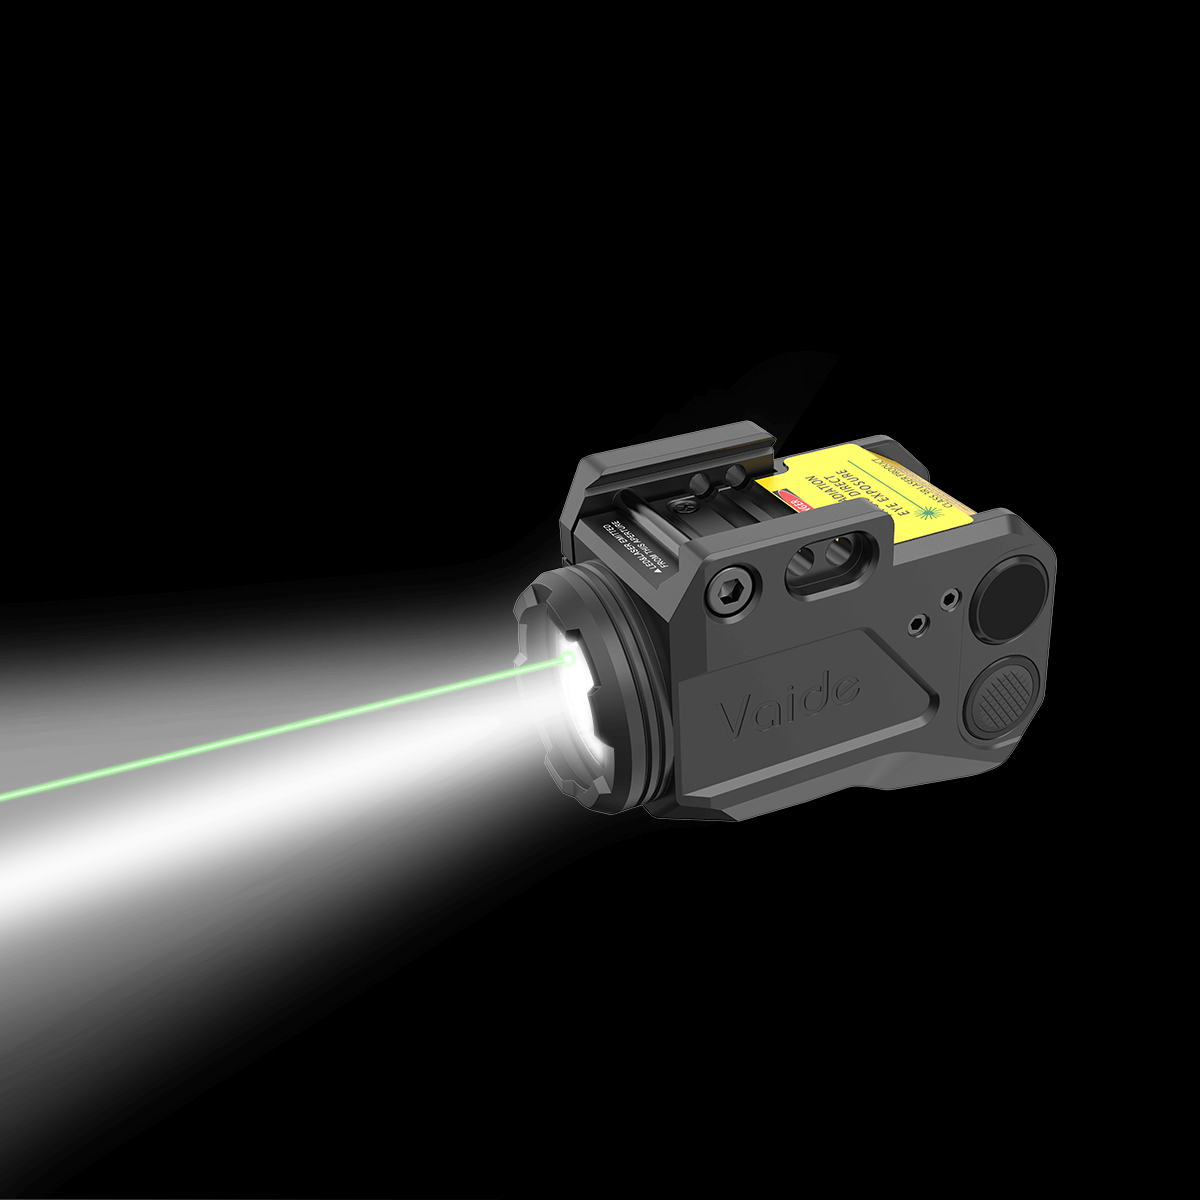 Vaide Scrapper Compact Green Laser Flashlight Combo